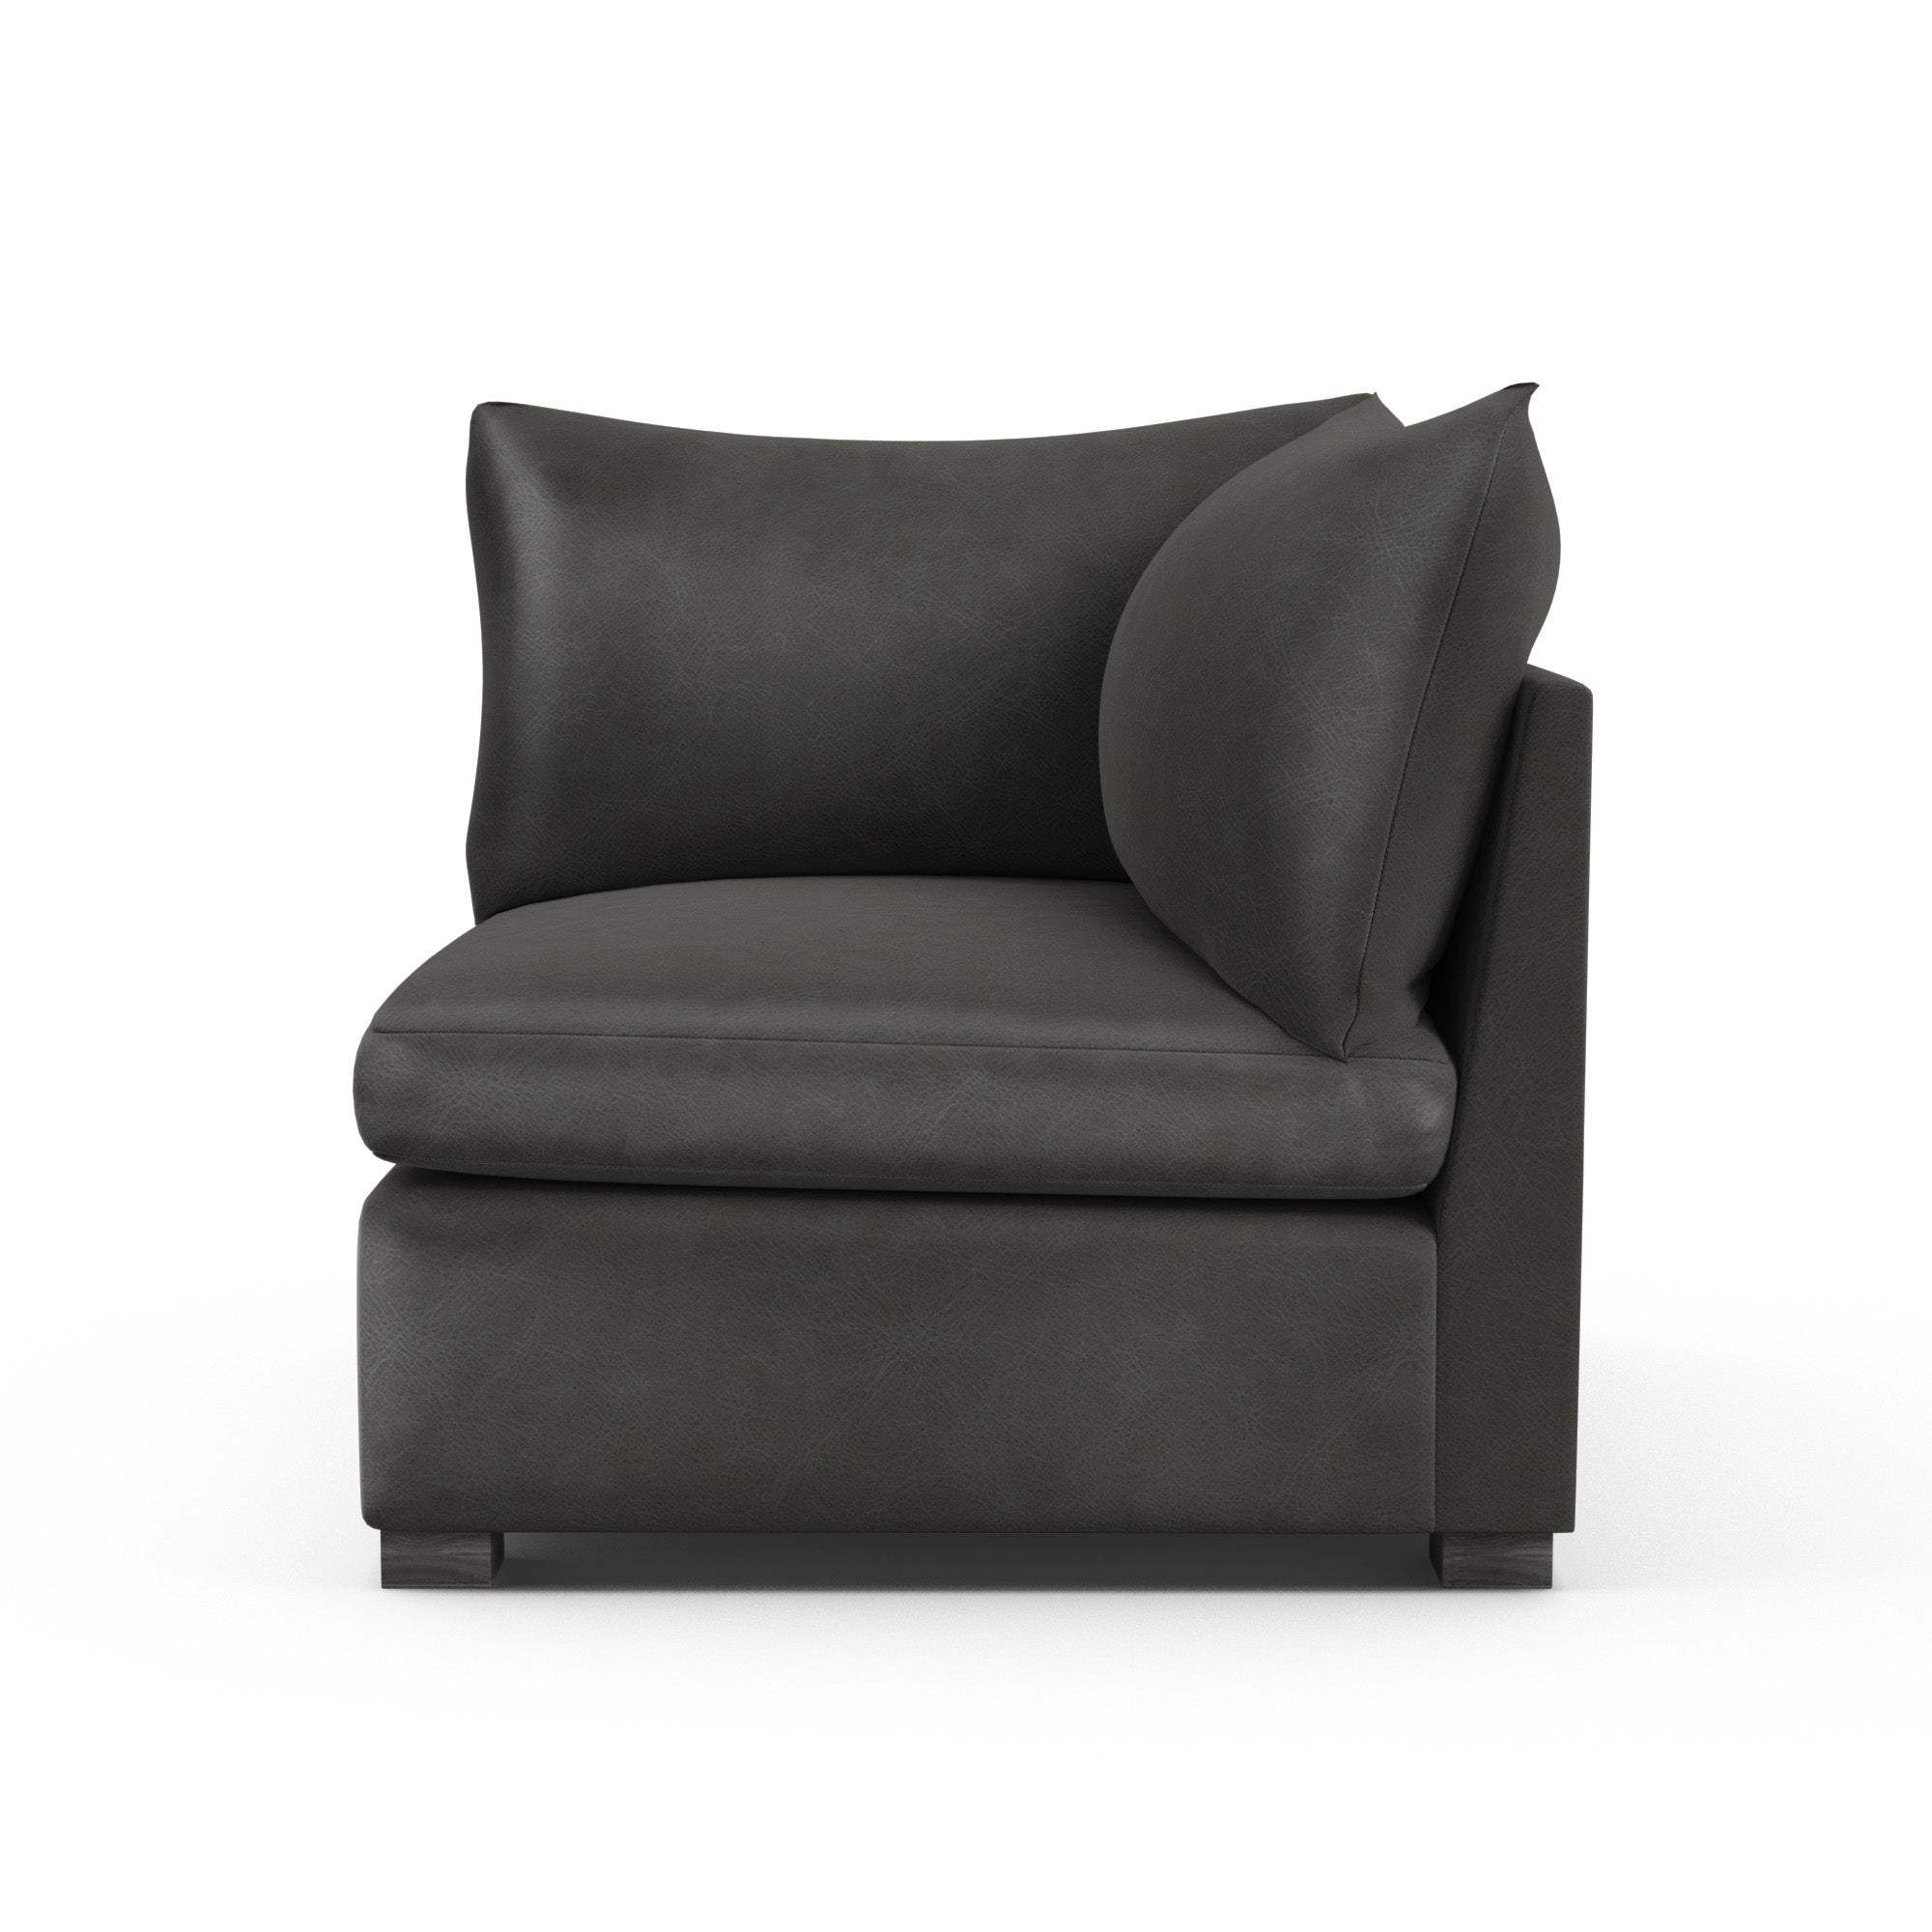 Evans Corner Chair - Graphite Vintage Leather